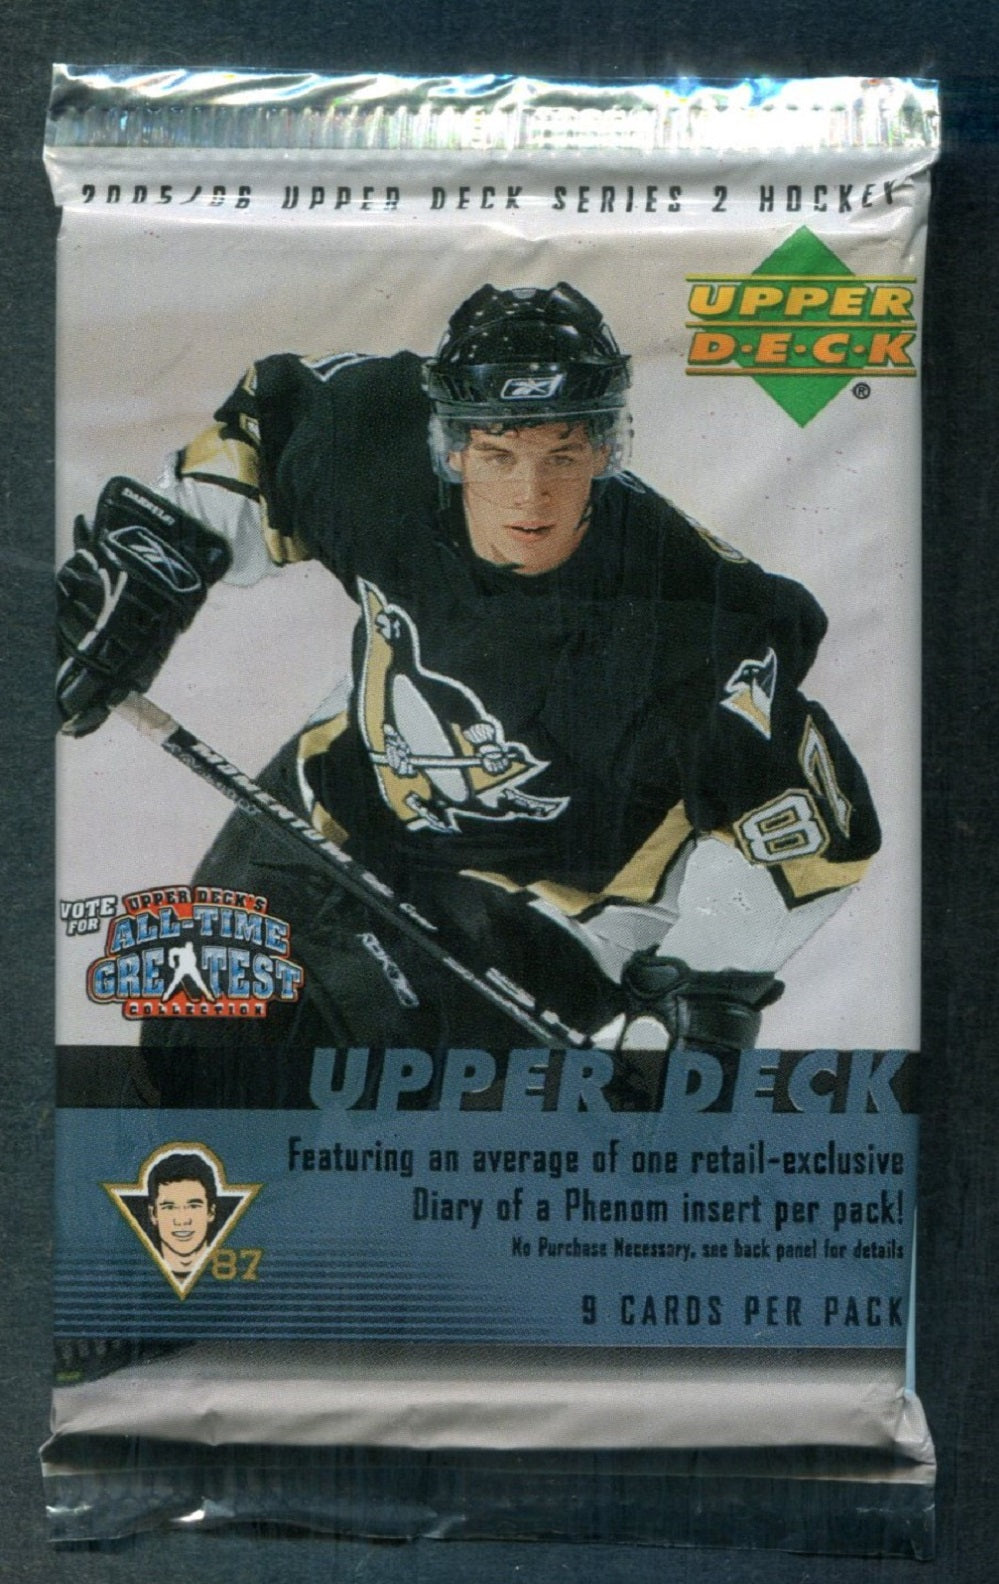 2005/06 Upper Deck Hockey Series 2 Unopened Pack (Retail)